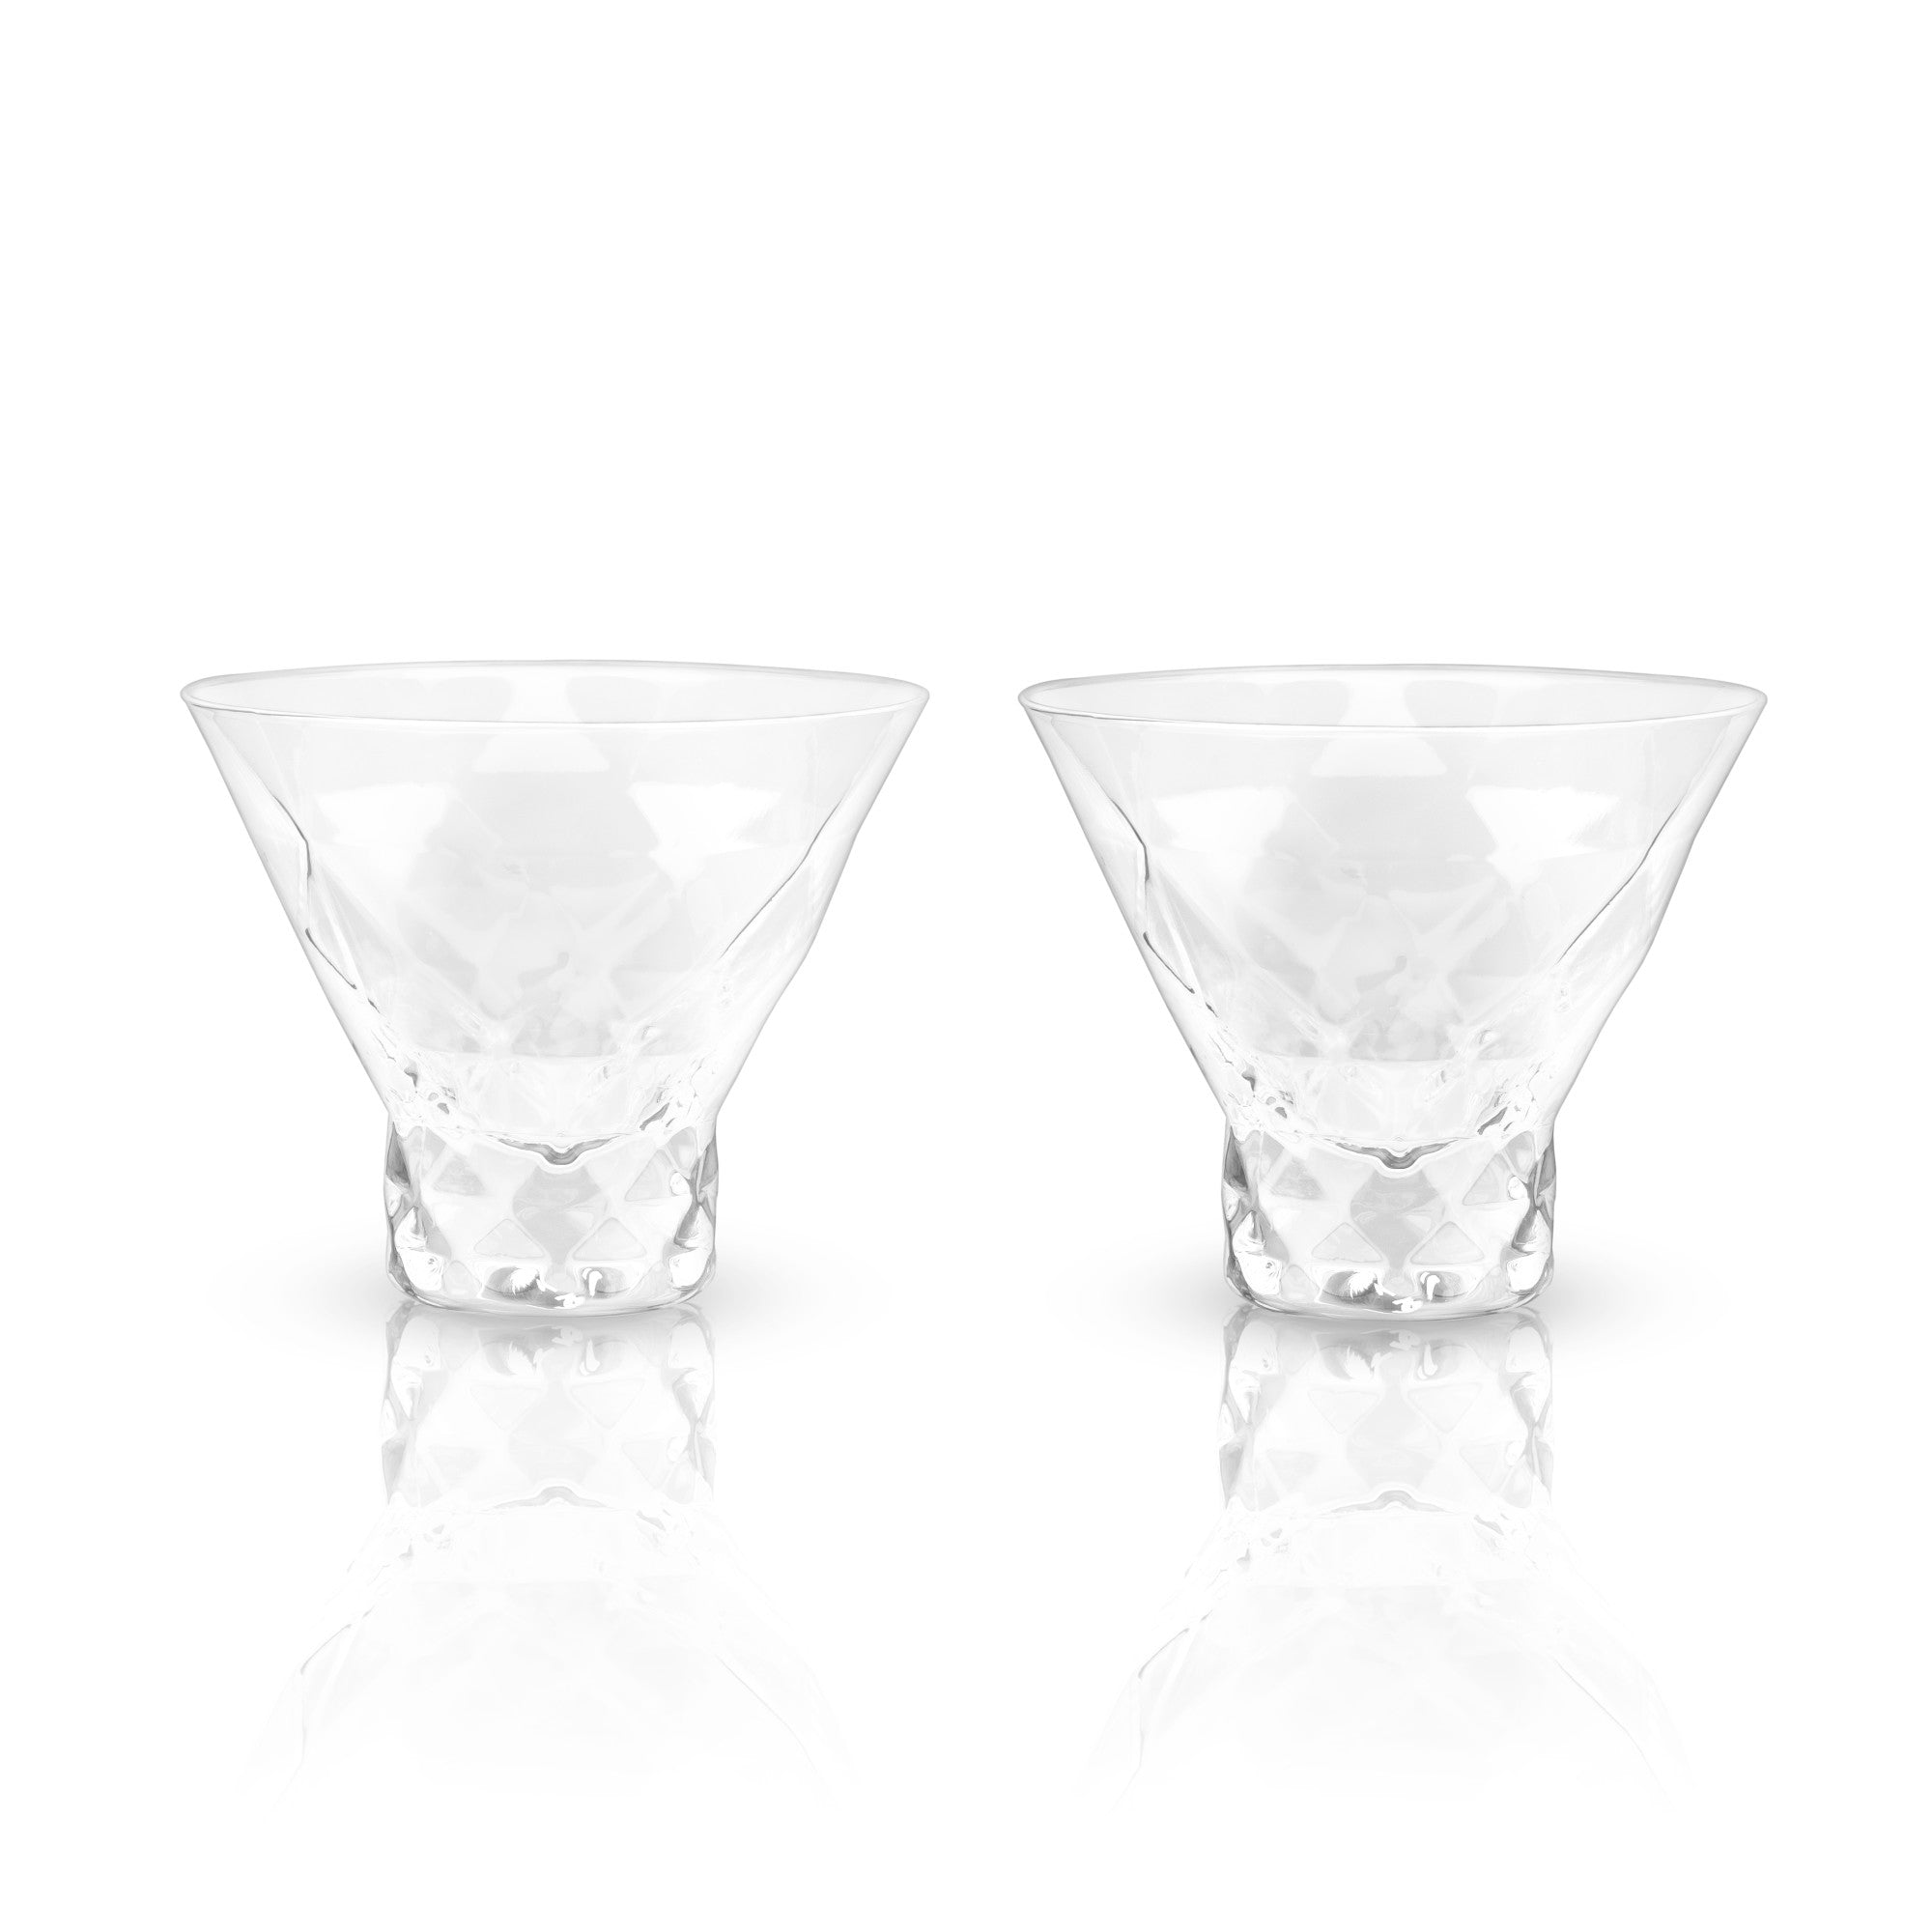 Buy Wholesale China Martini Glass Set Of 2. Crystal Glassware